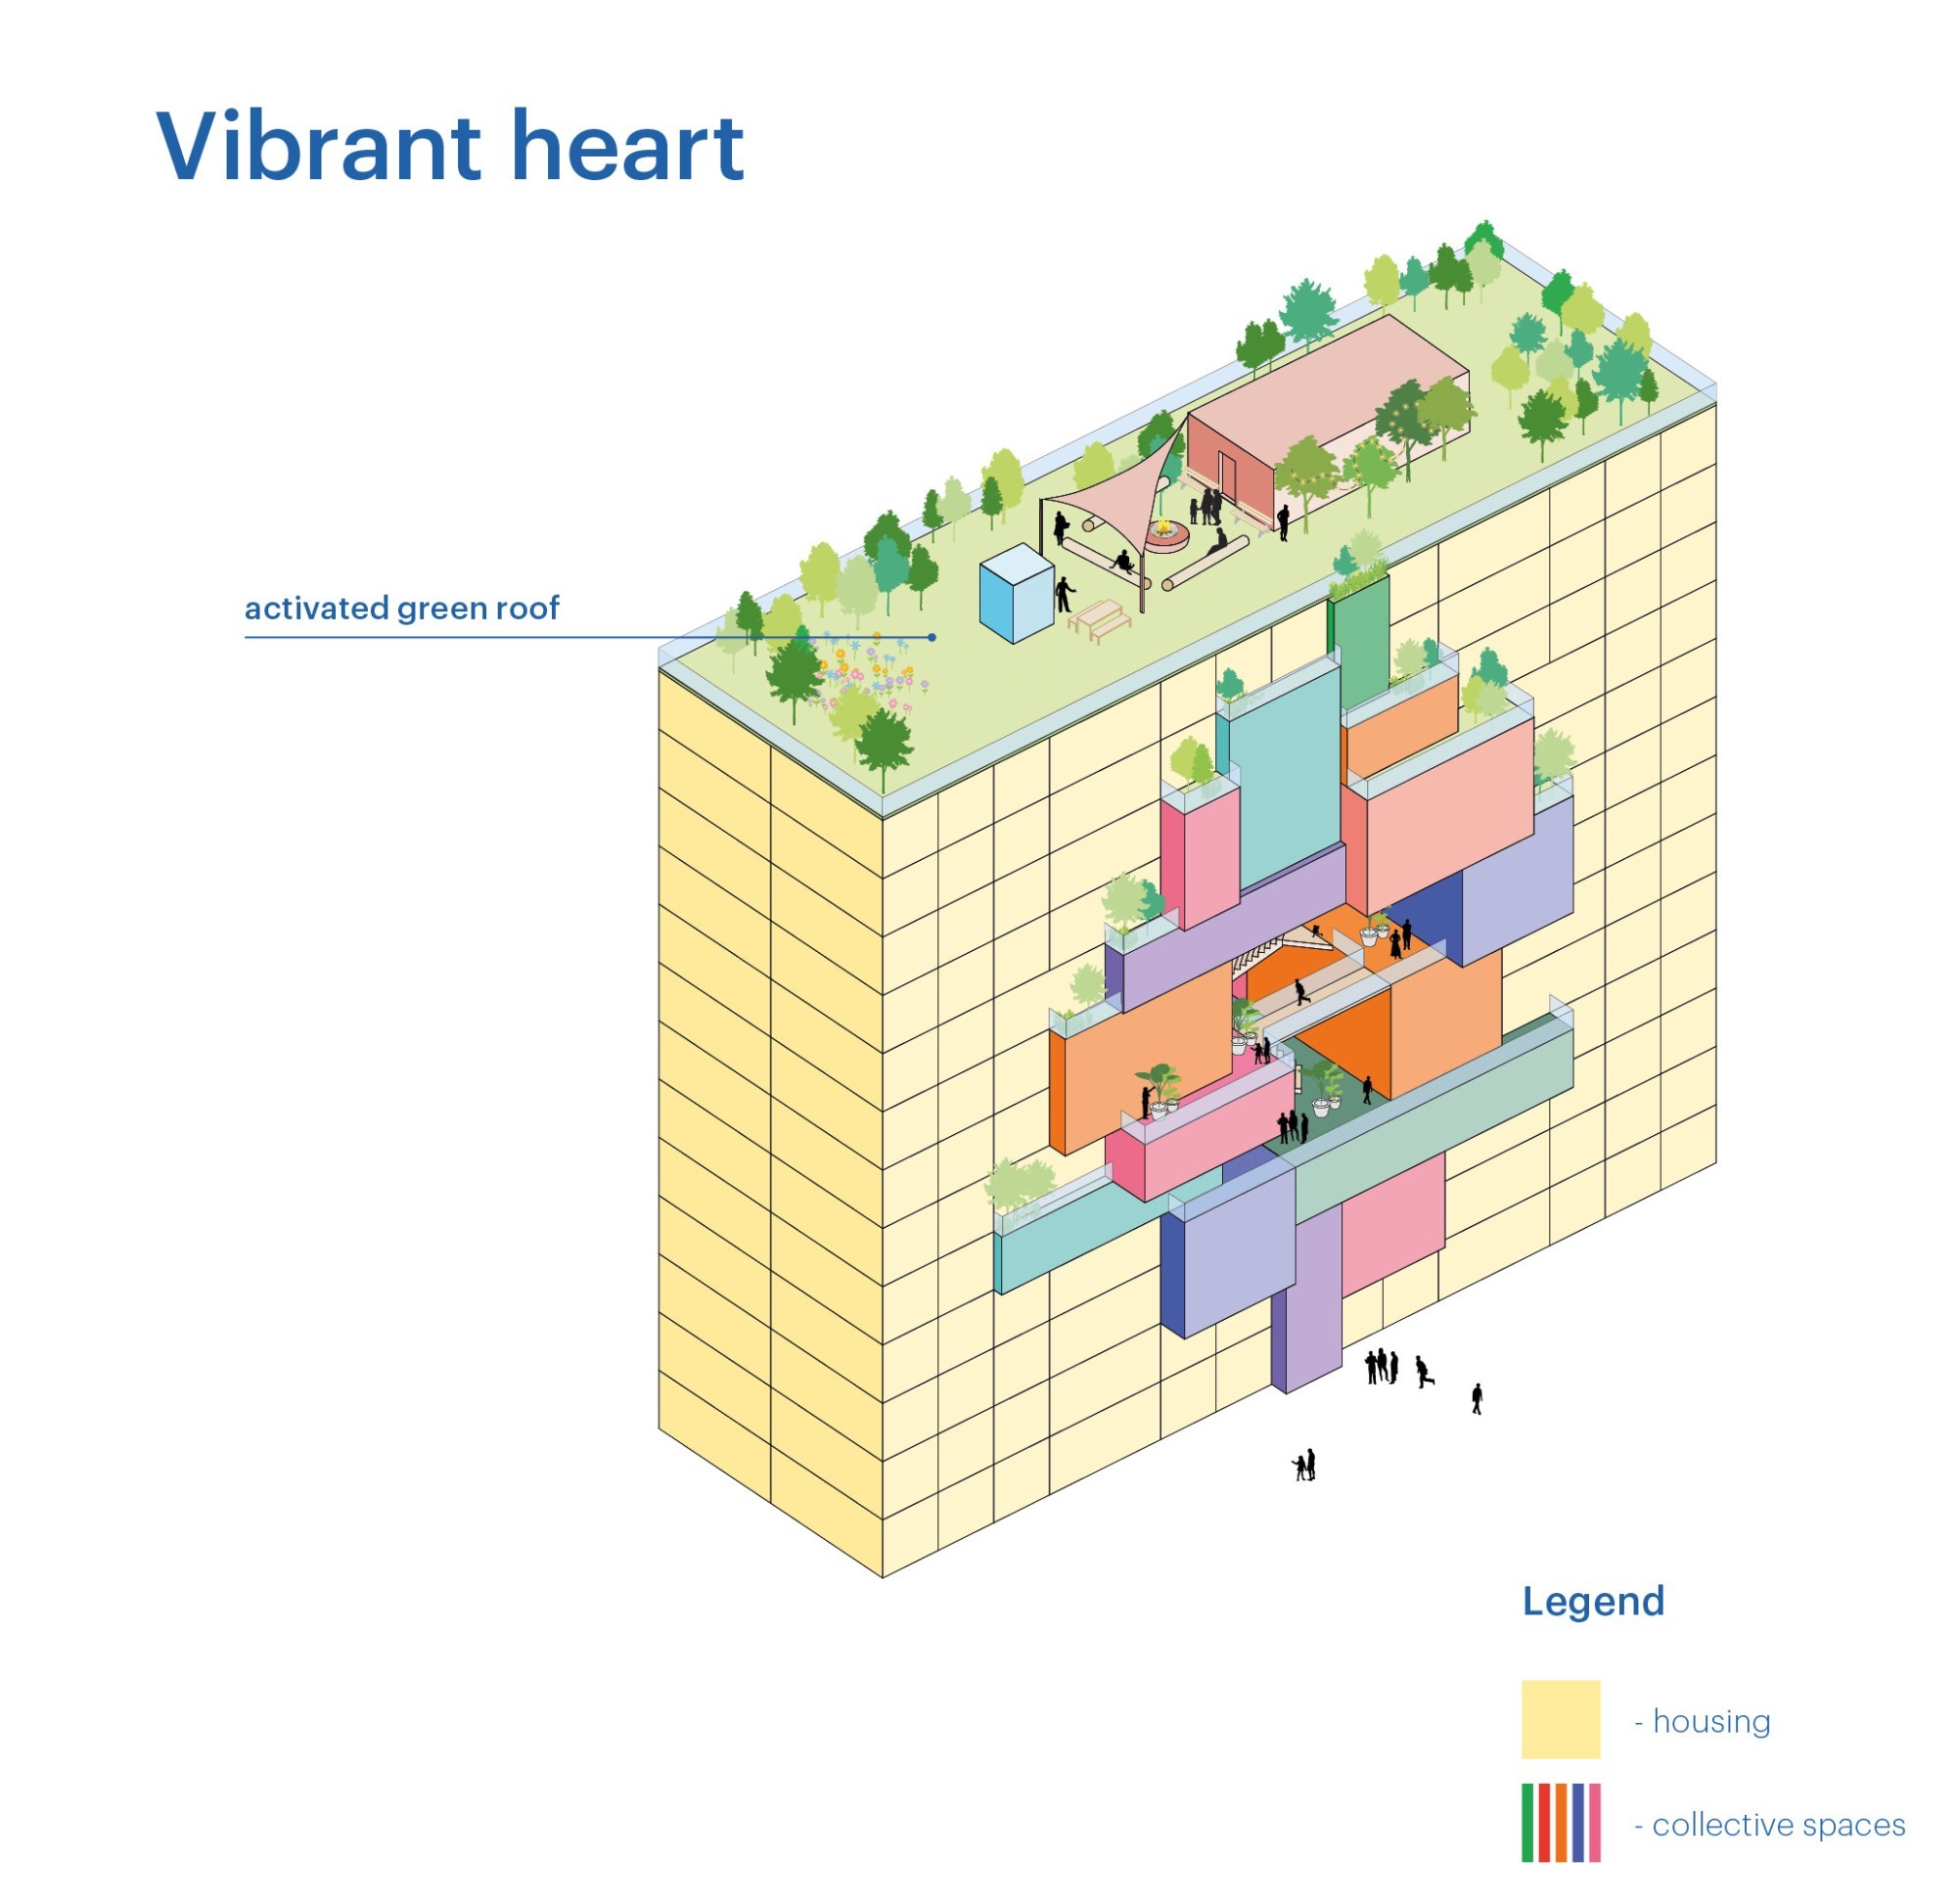 Vibrant heart